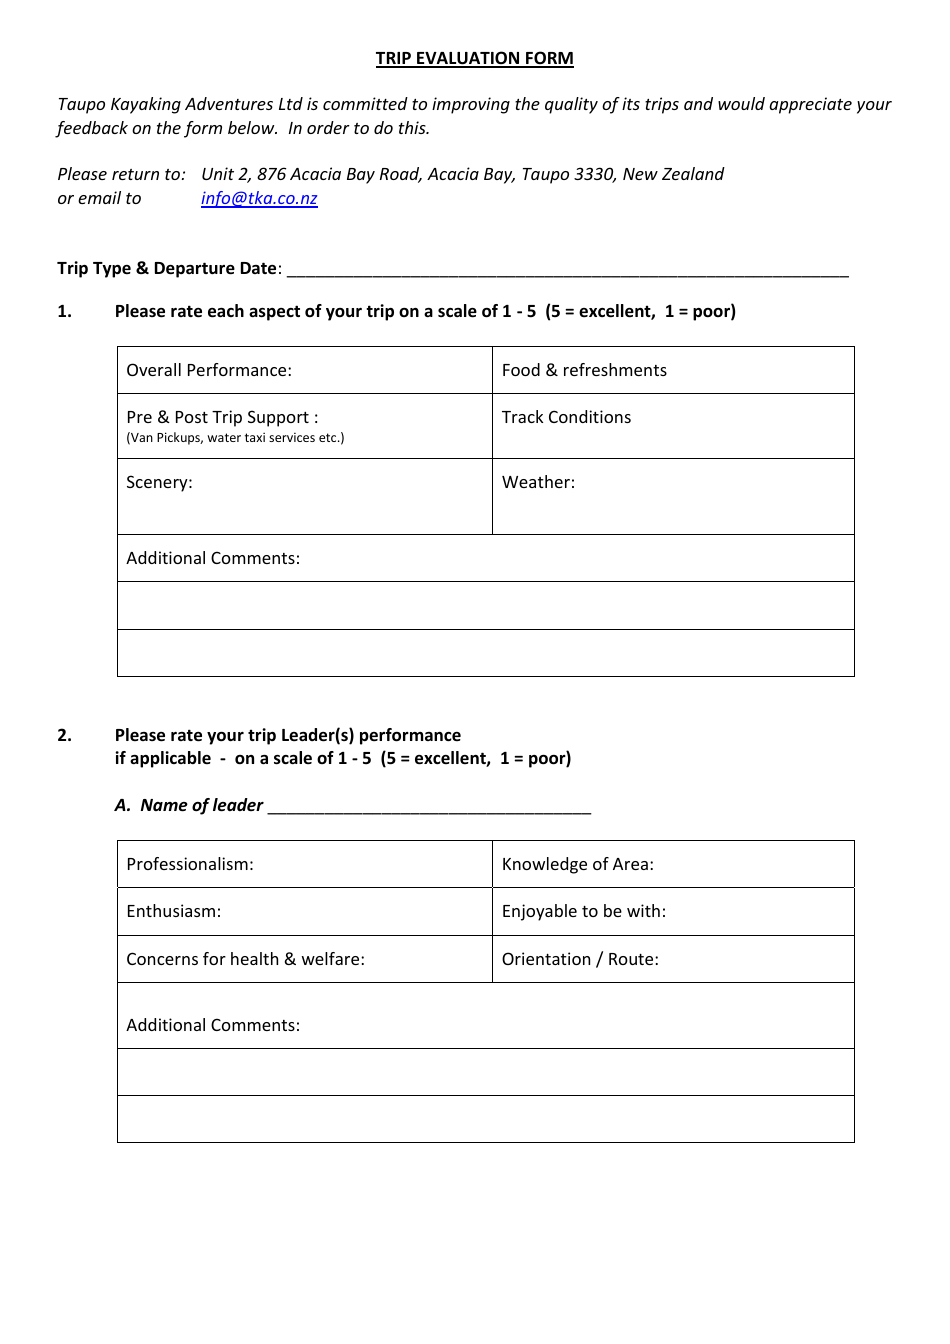 Trip Evaluation Form - Taupo Kayaking Adventures Ltd, Page 1